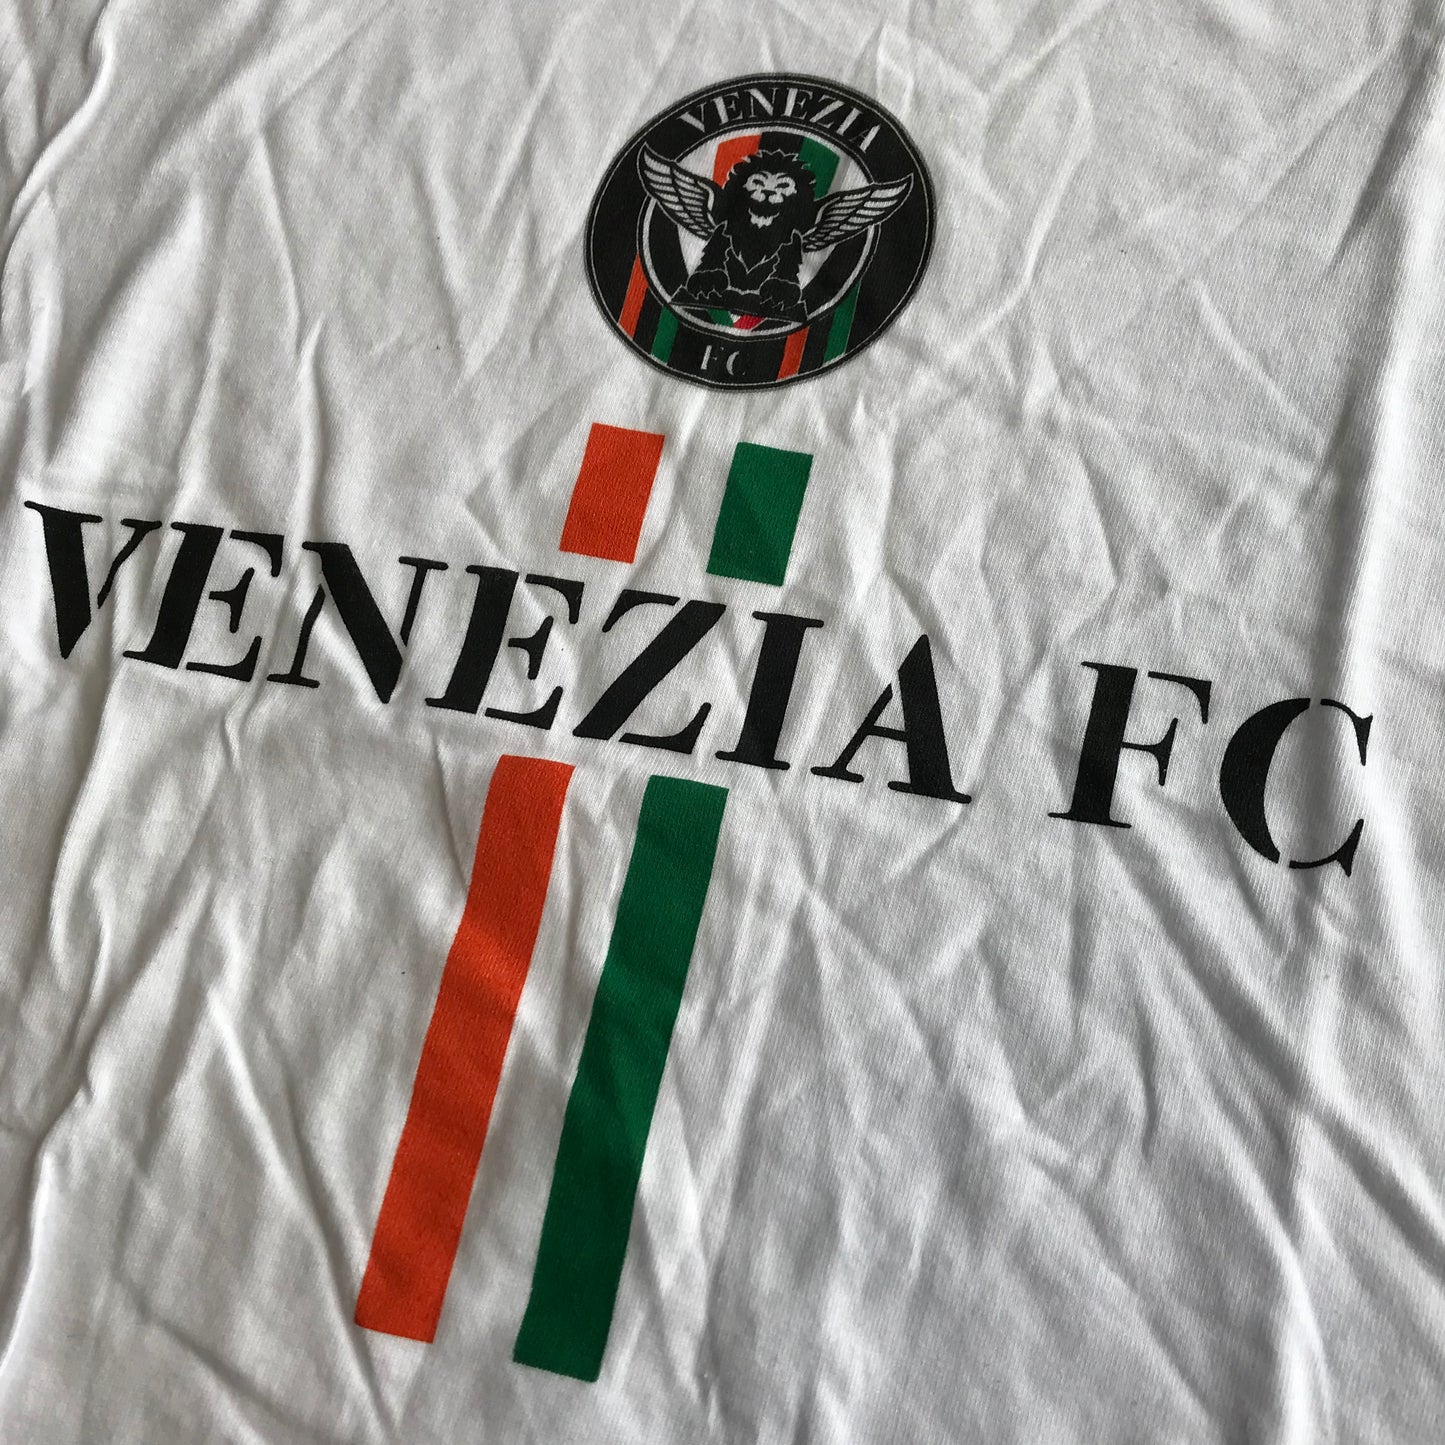 Football Top - Cotton Venezia FC - Age 9